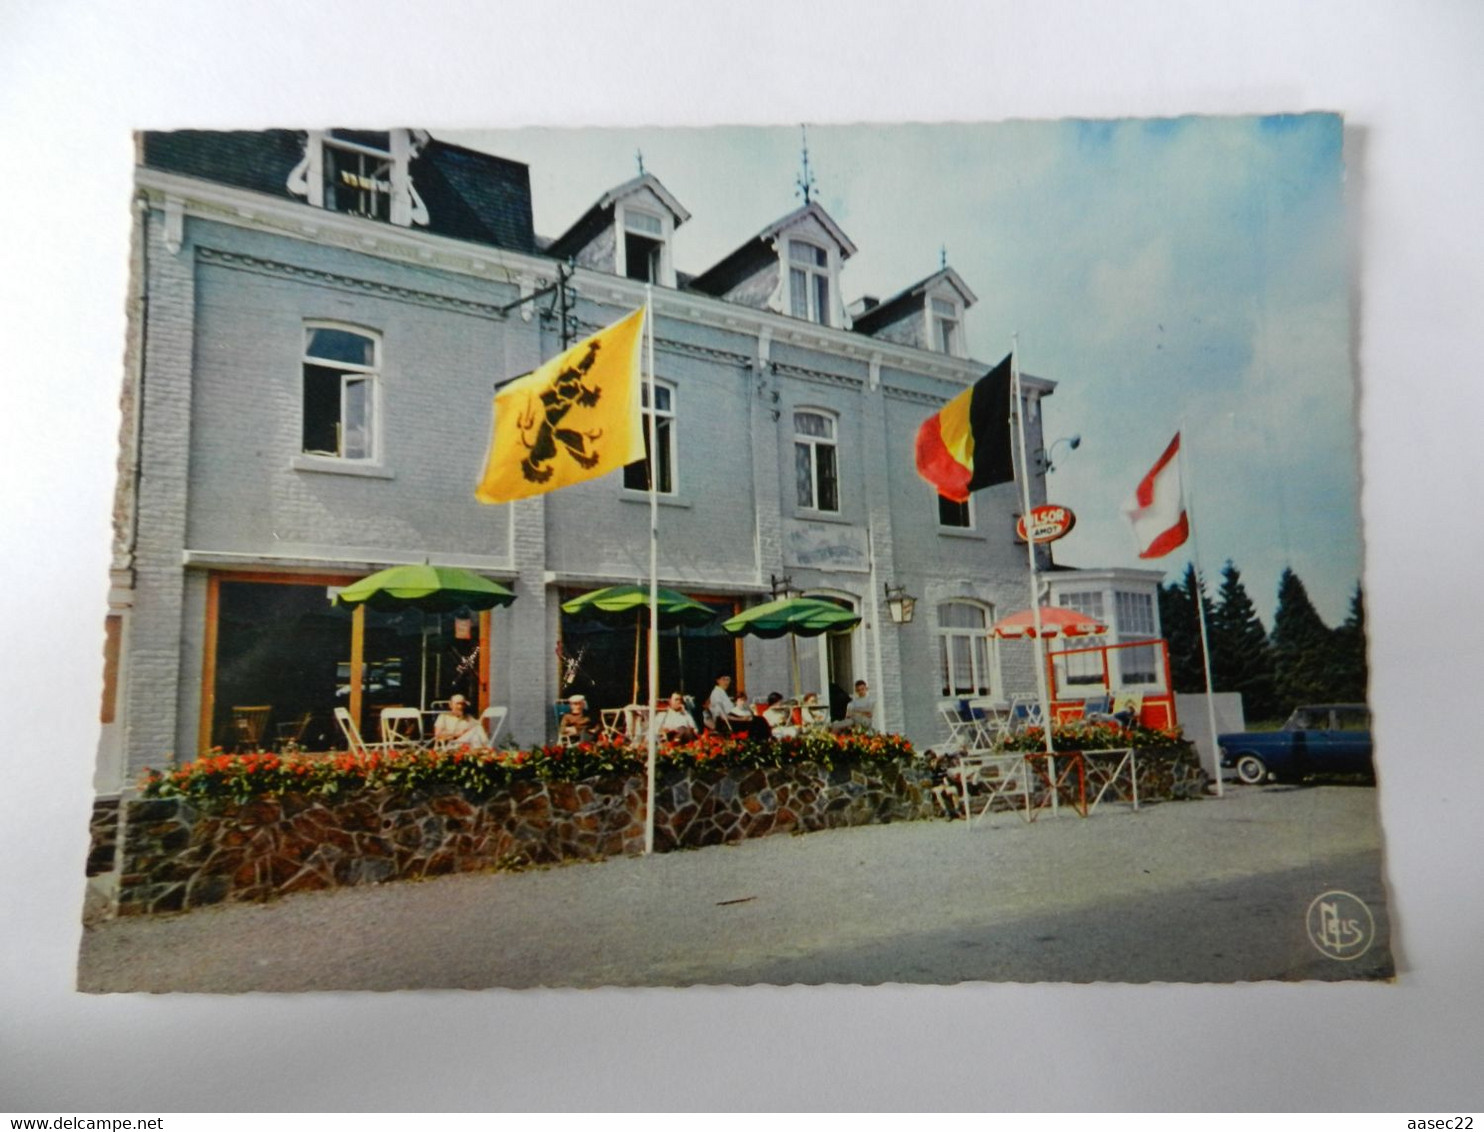 Oude Postkaart Van Belgie  --   Rendeux - Rendeux